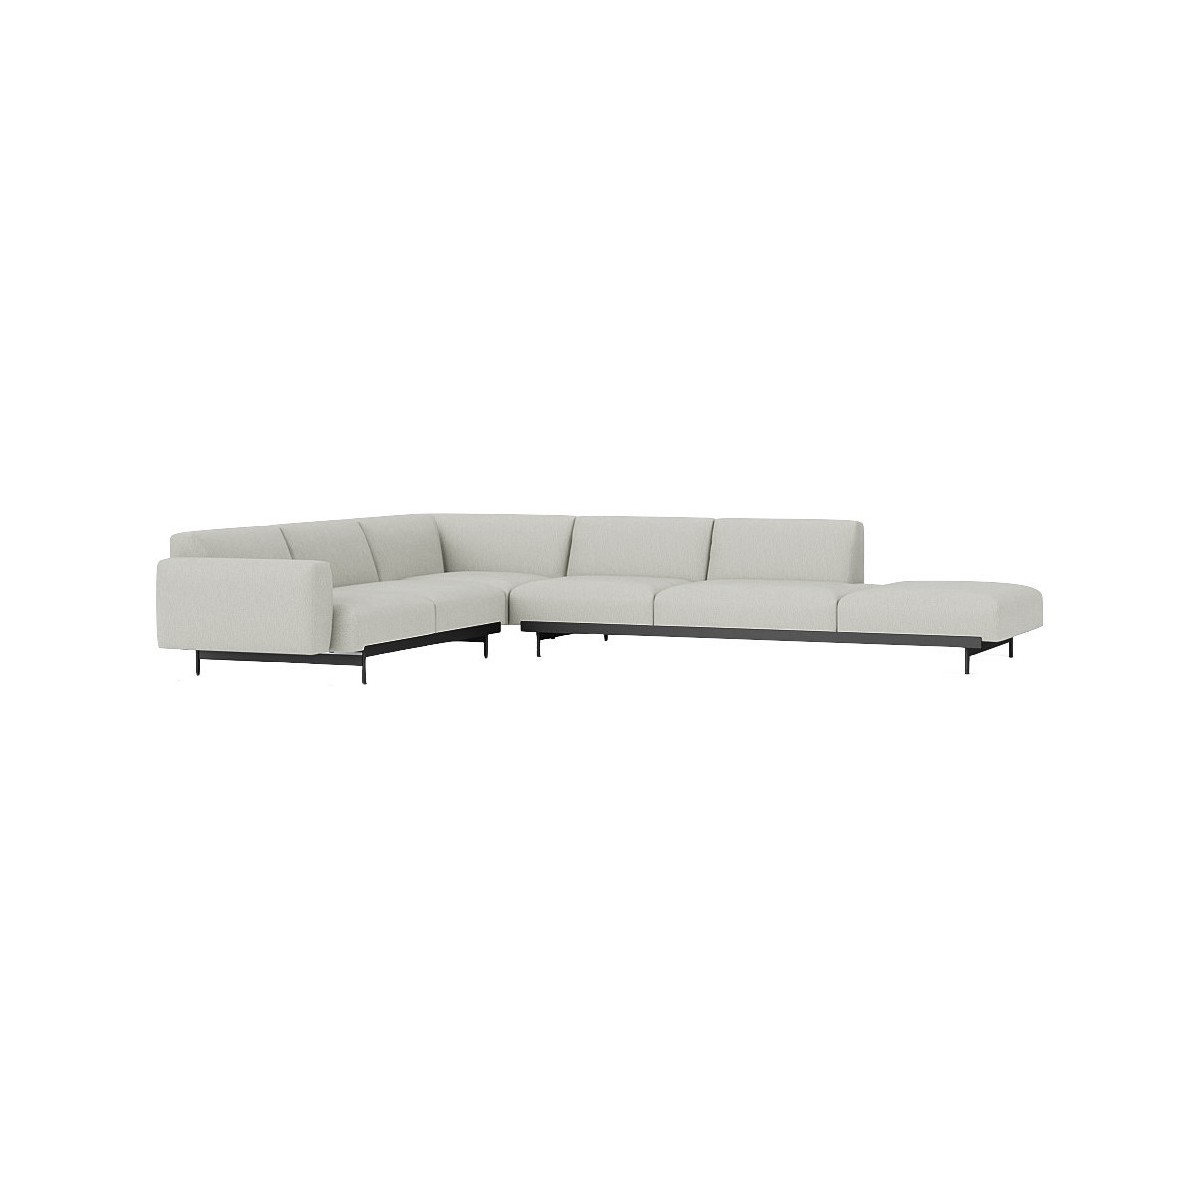 Clay 12 / black – In Situ corner sofa / configuration 7 – 368 x 287 cm